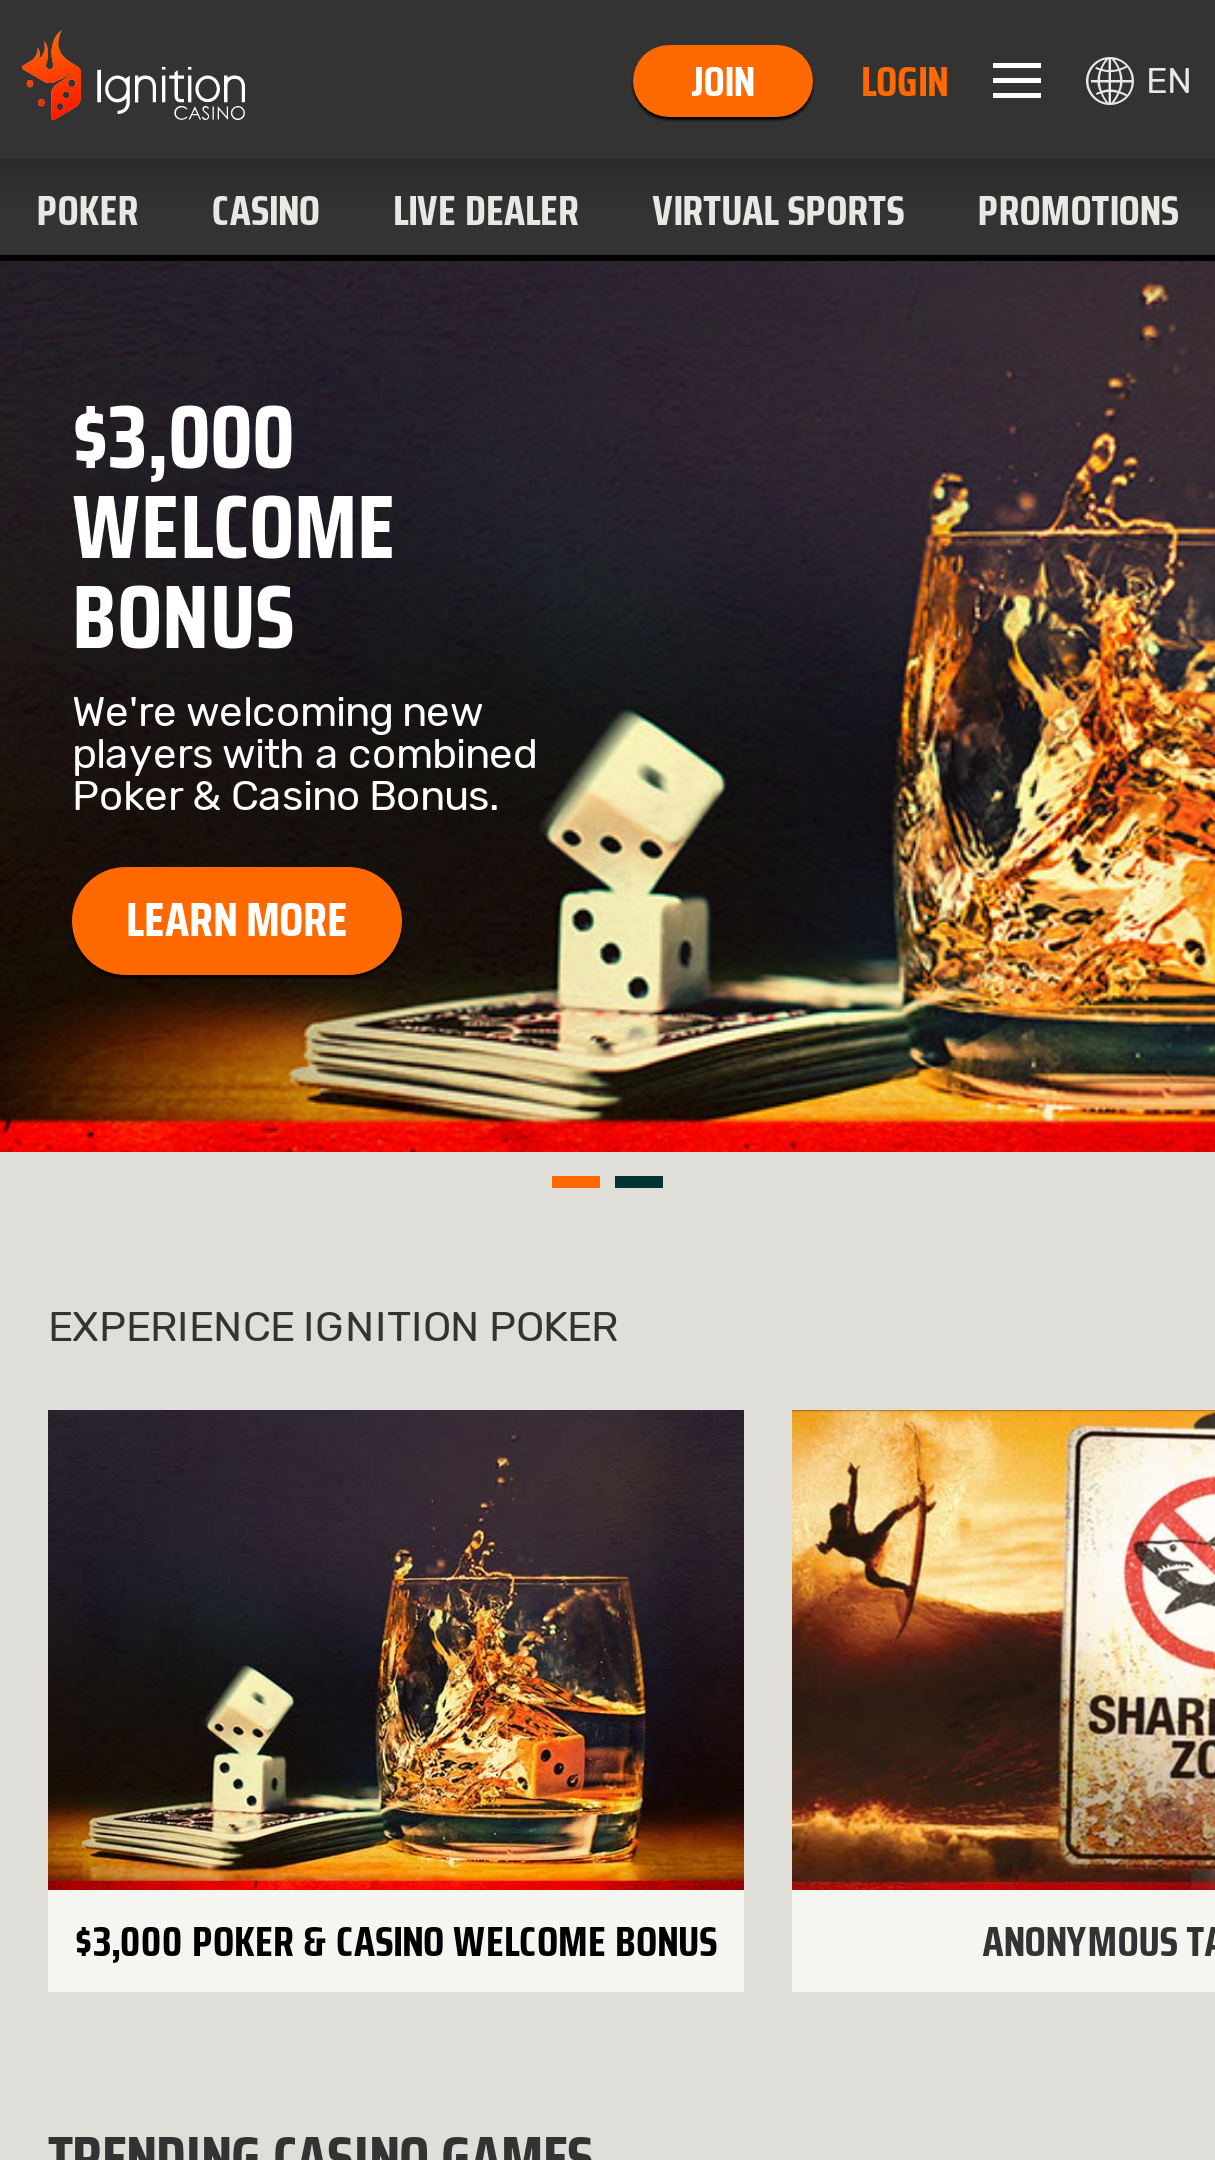 ignition casino app wont open